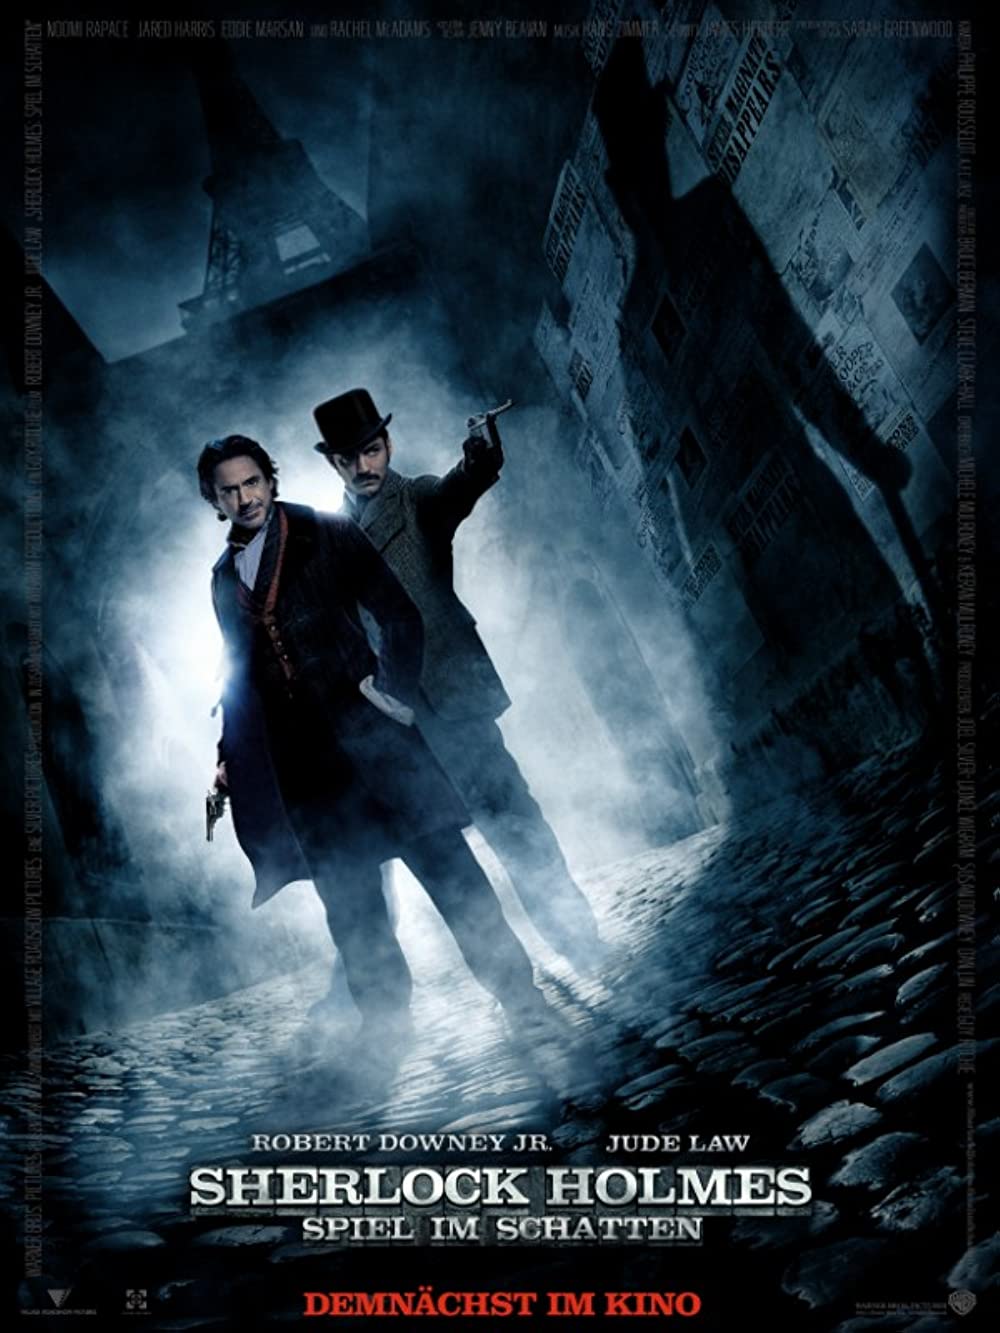 Filmbeschreibung zu Sherlock Holmes: A Game of Shadows